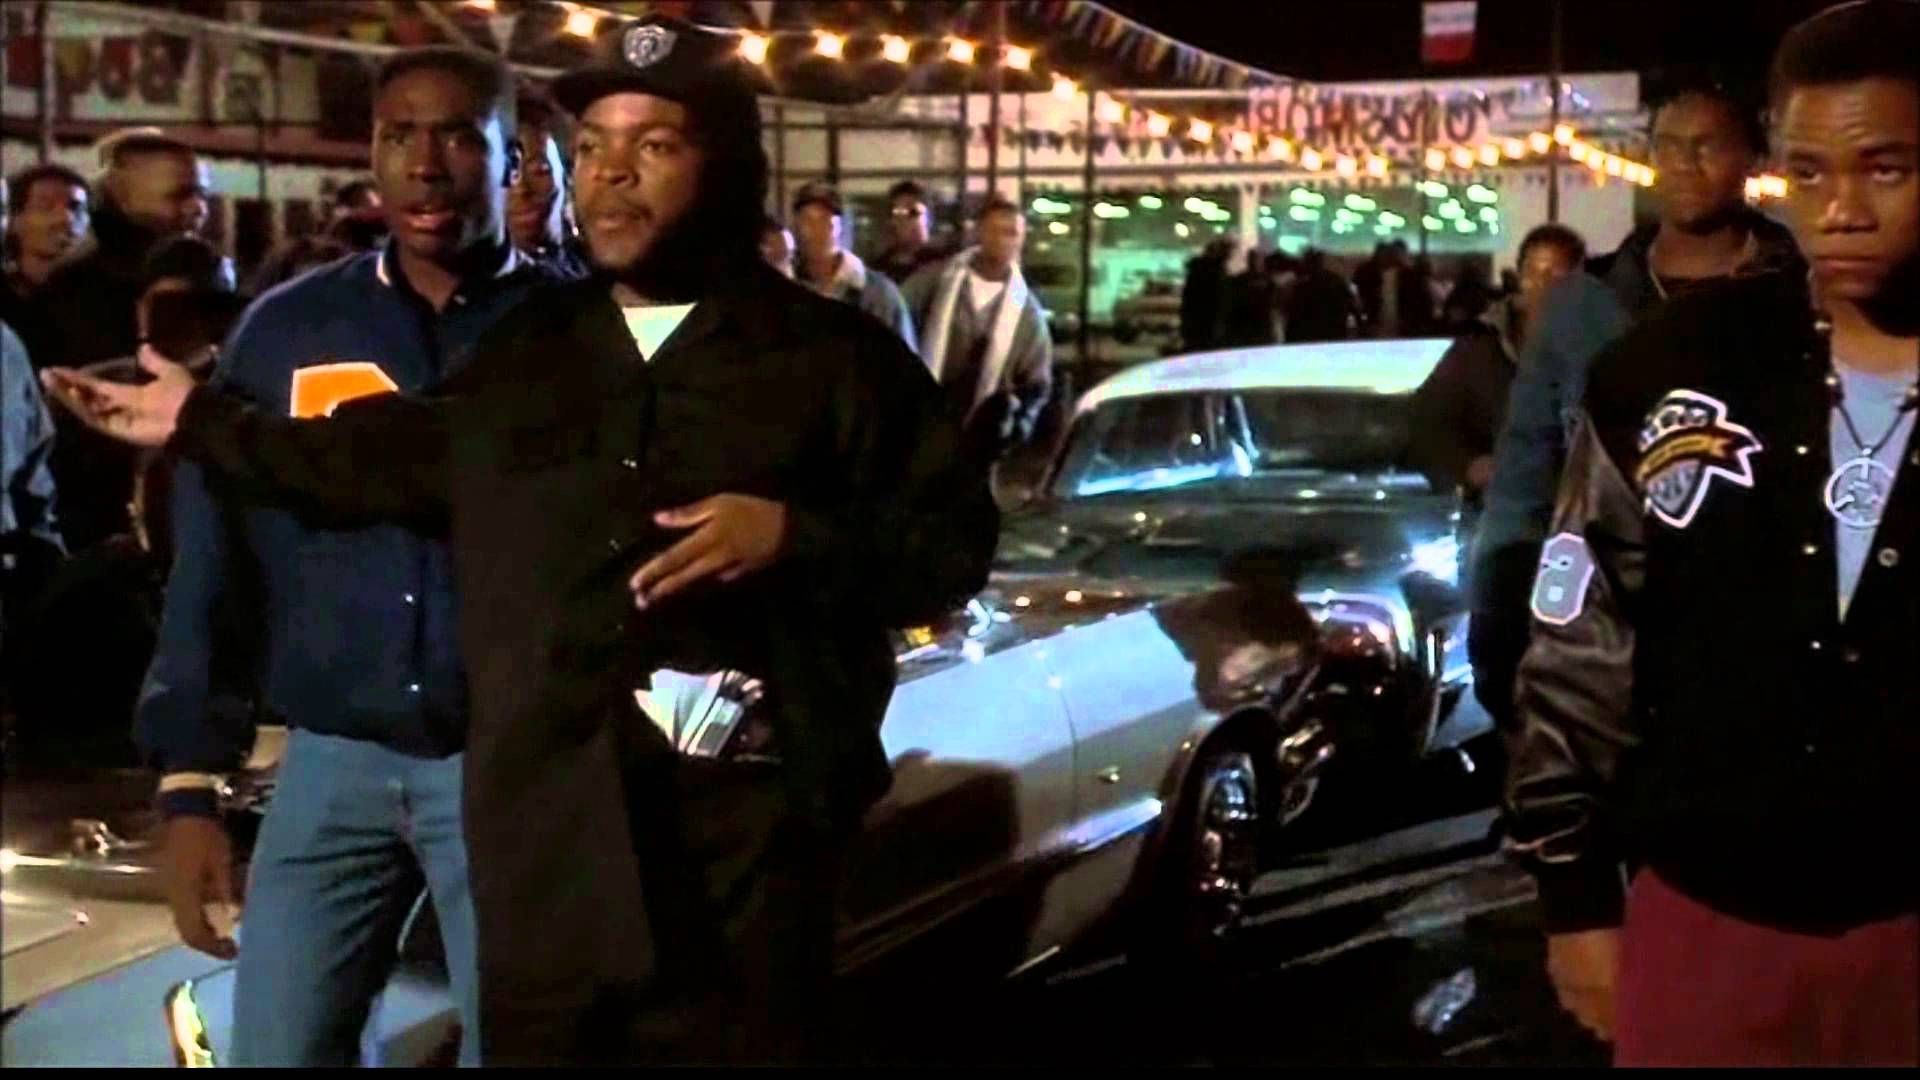 Ребята по соседству. Ice Cube Boyz n the Hood. Ребята с улицы / Boyz n the Hood. Айс Кьюб ребята с улицы.